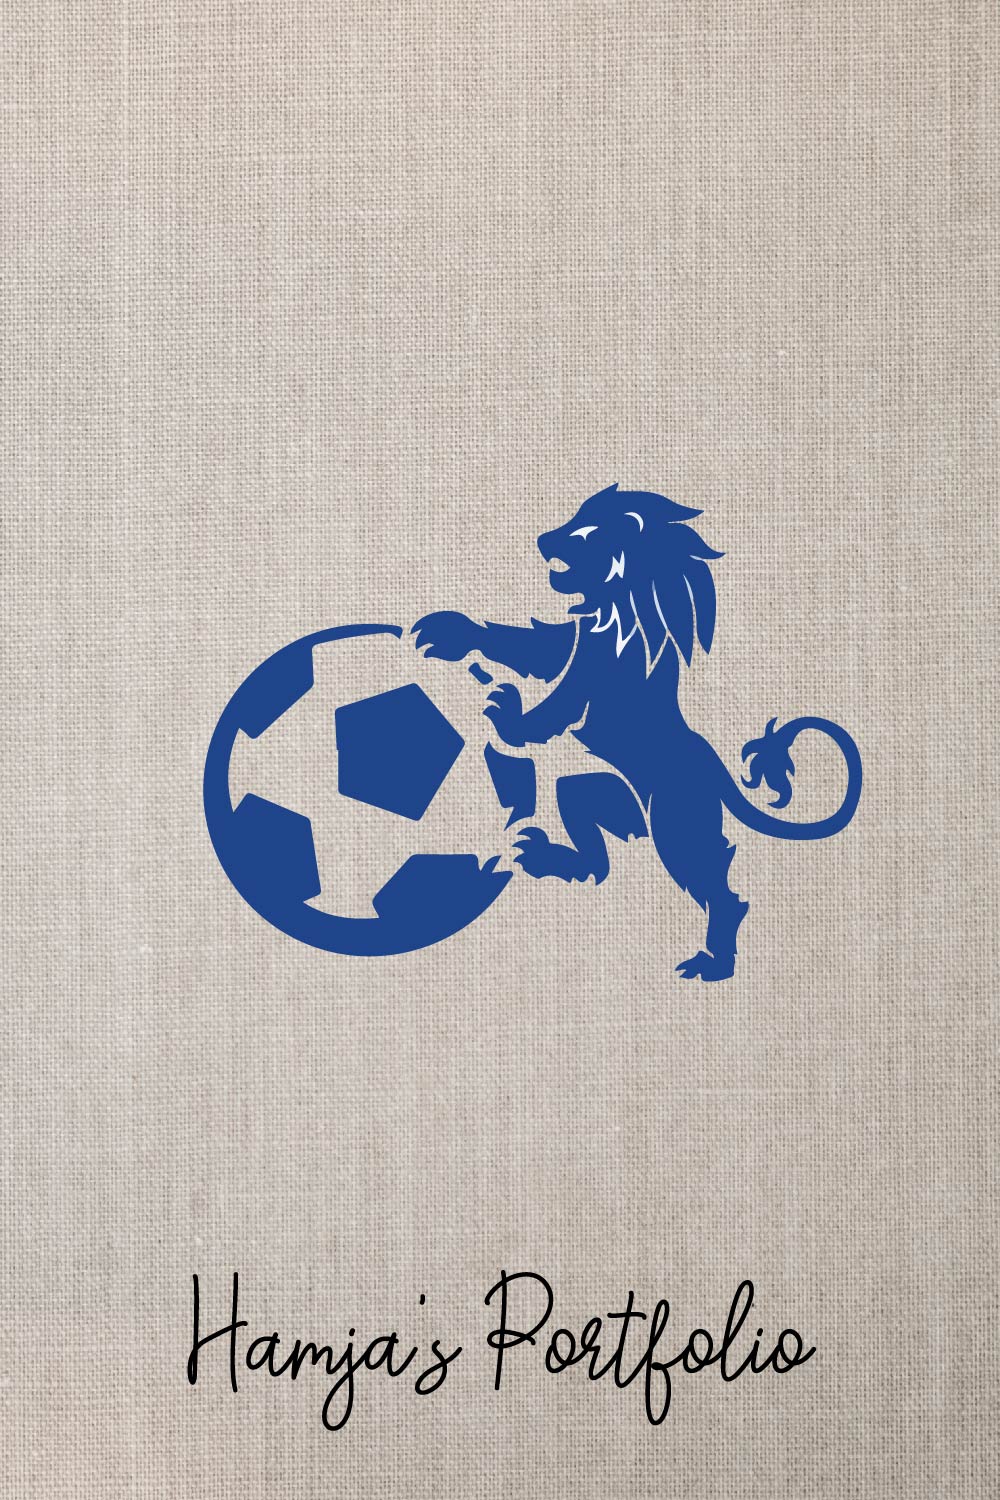 Chelsea Football Club Logo Vector Set pinterest preview image.